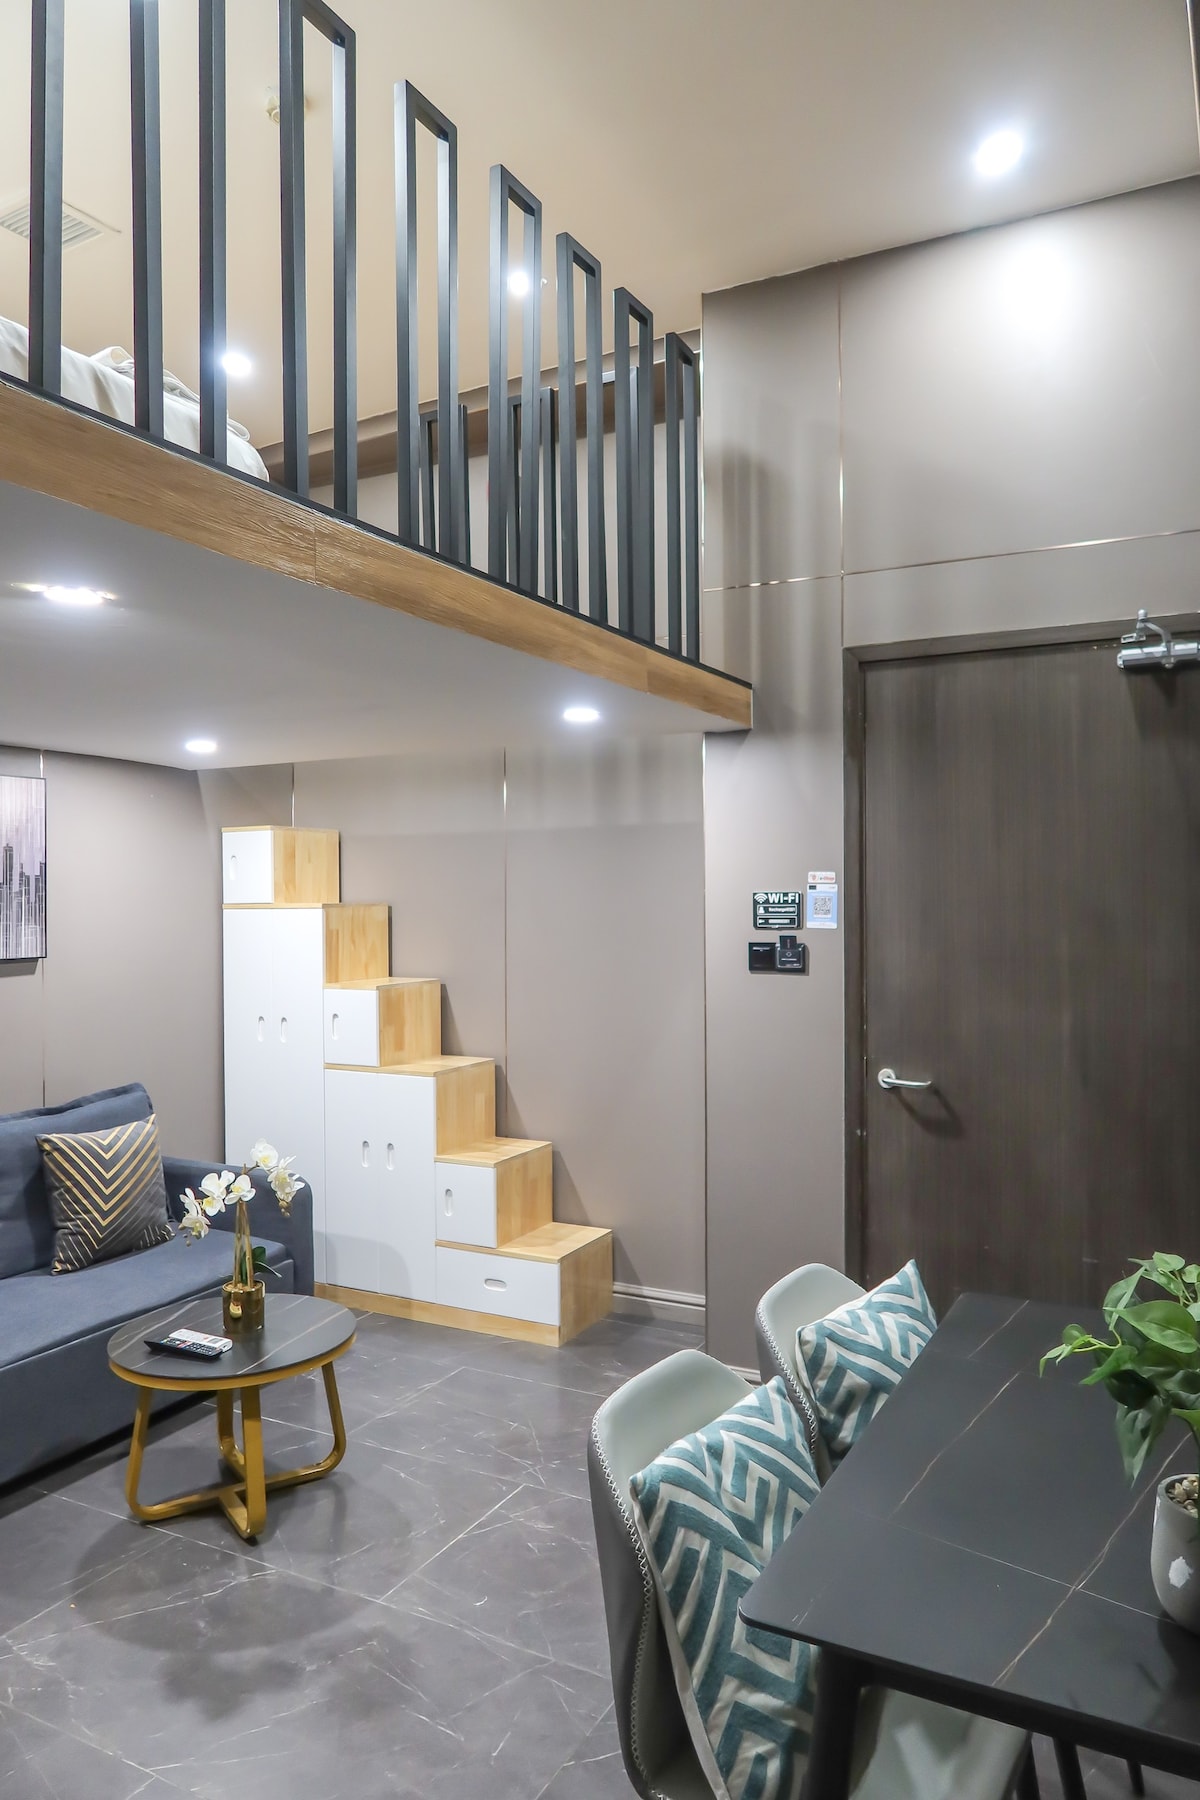 NEW Easy Access Loft Studio-Somerset/Orchard Area